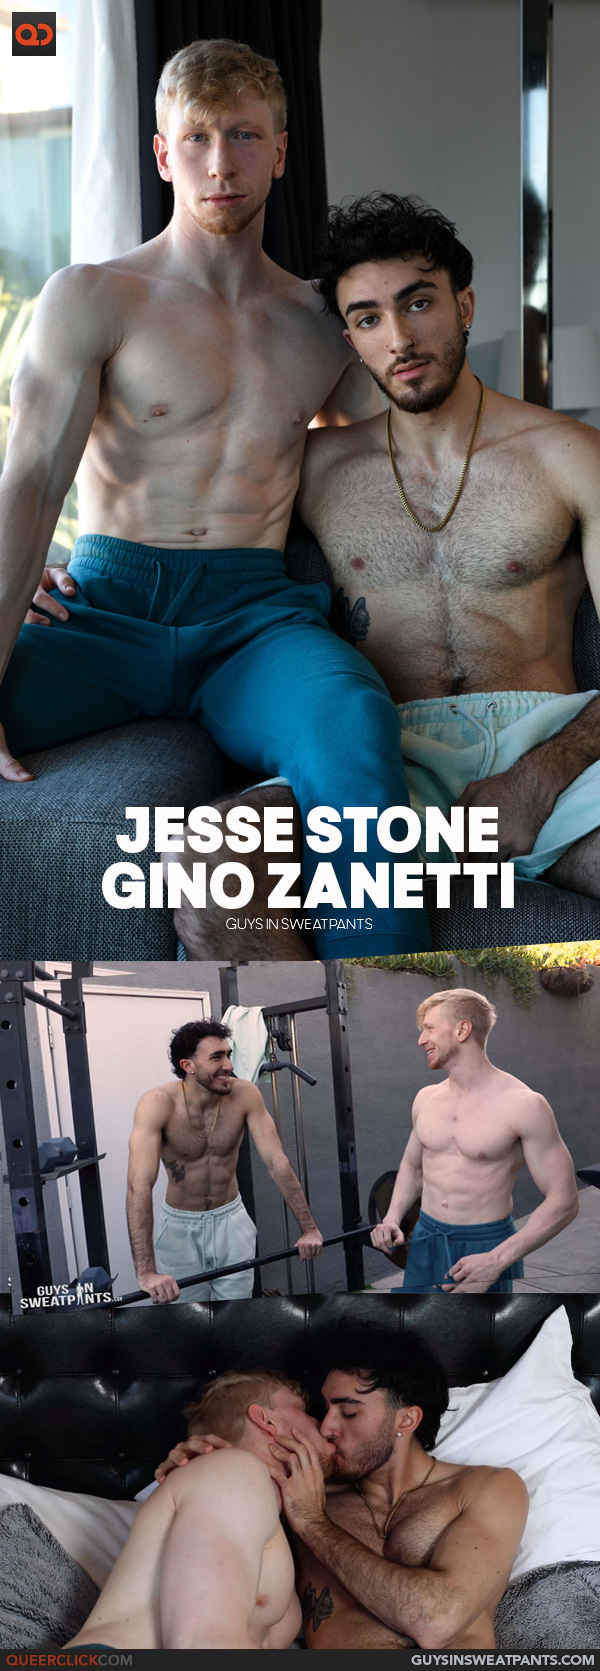 Guys In Sweatpants: Gino Zanetti and Jesse Stone